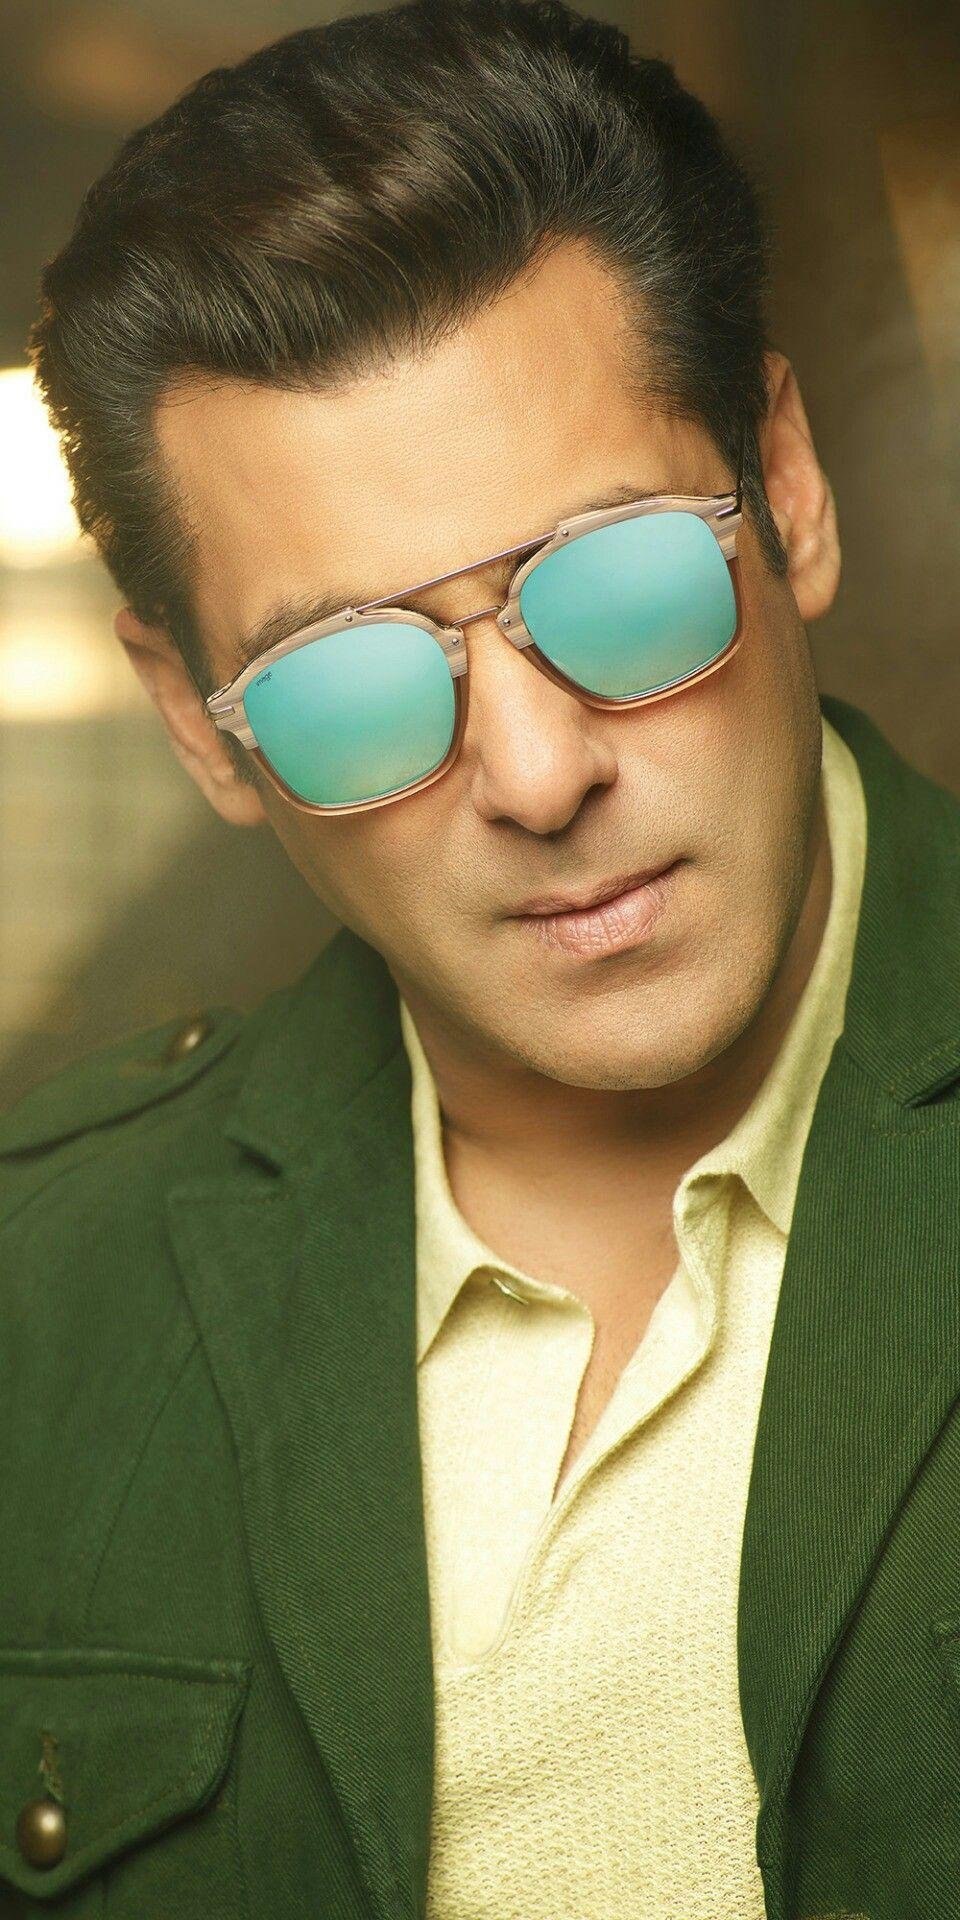 Salman Khan Wearing Sunglasses